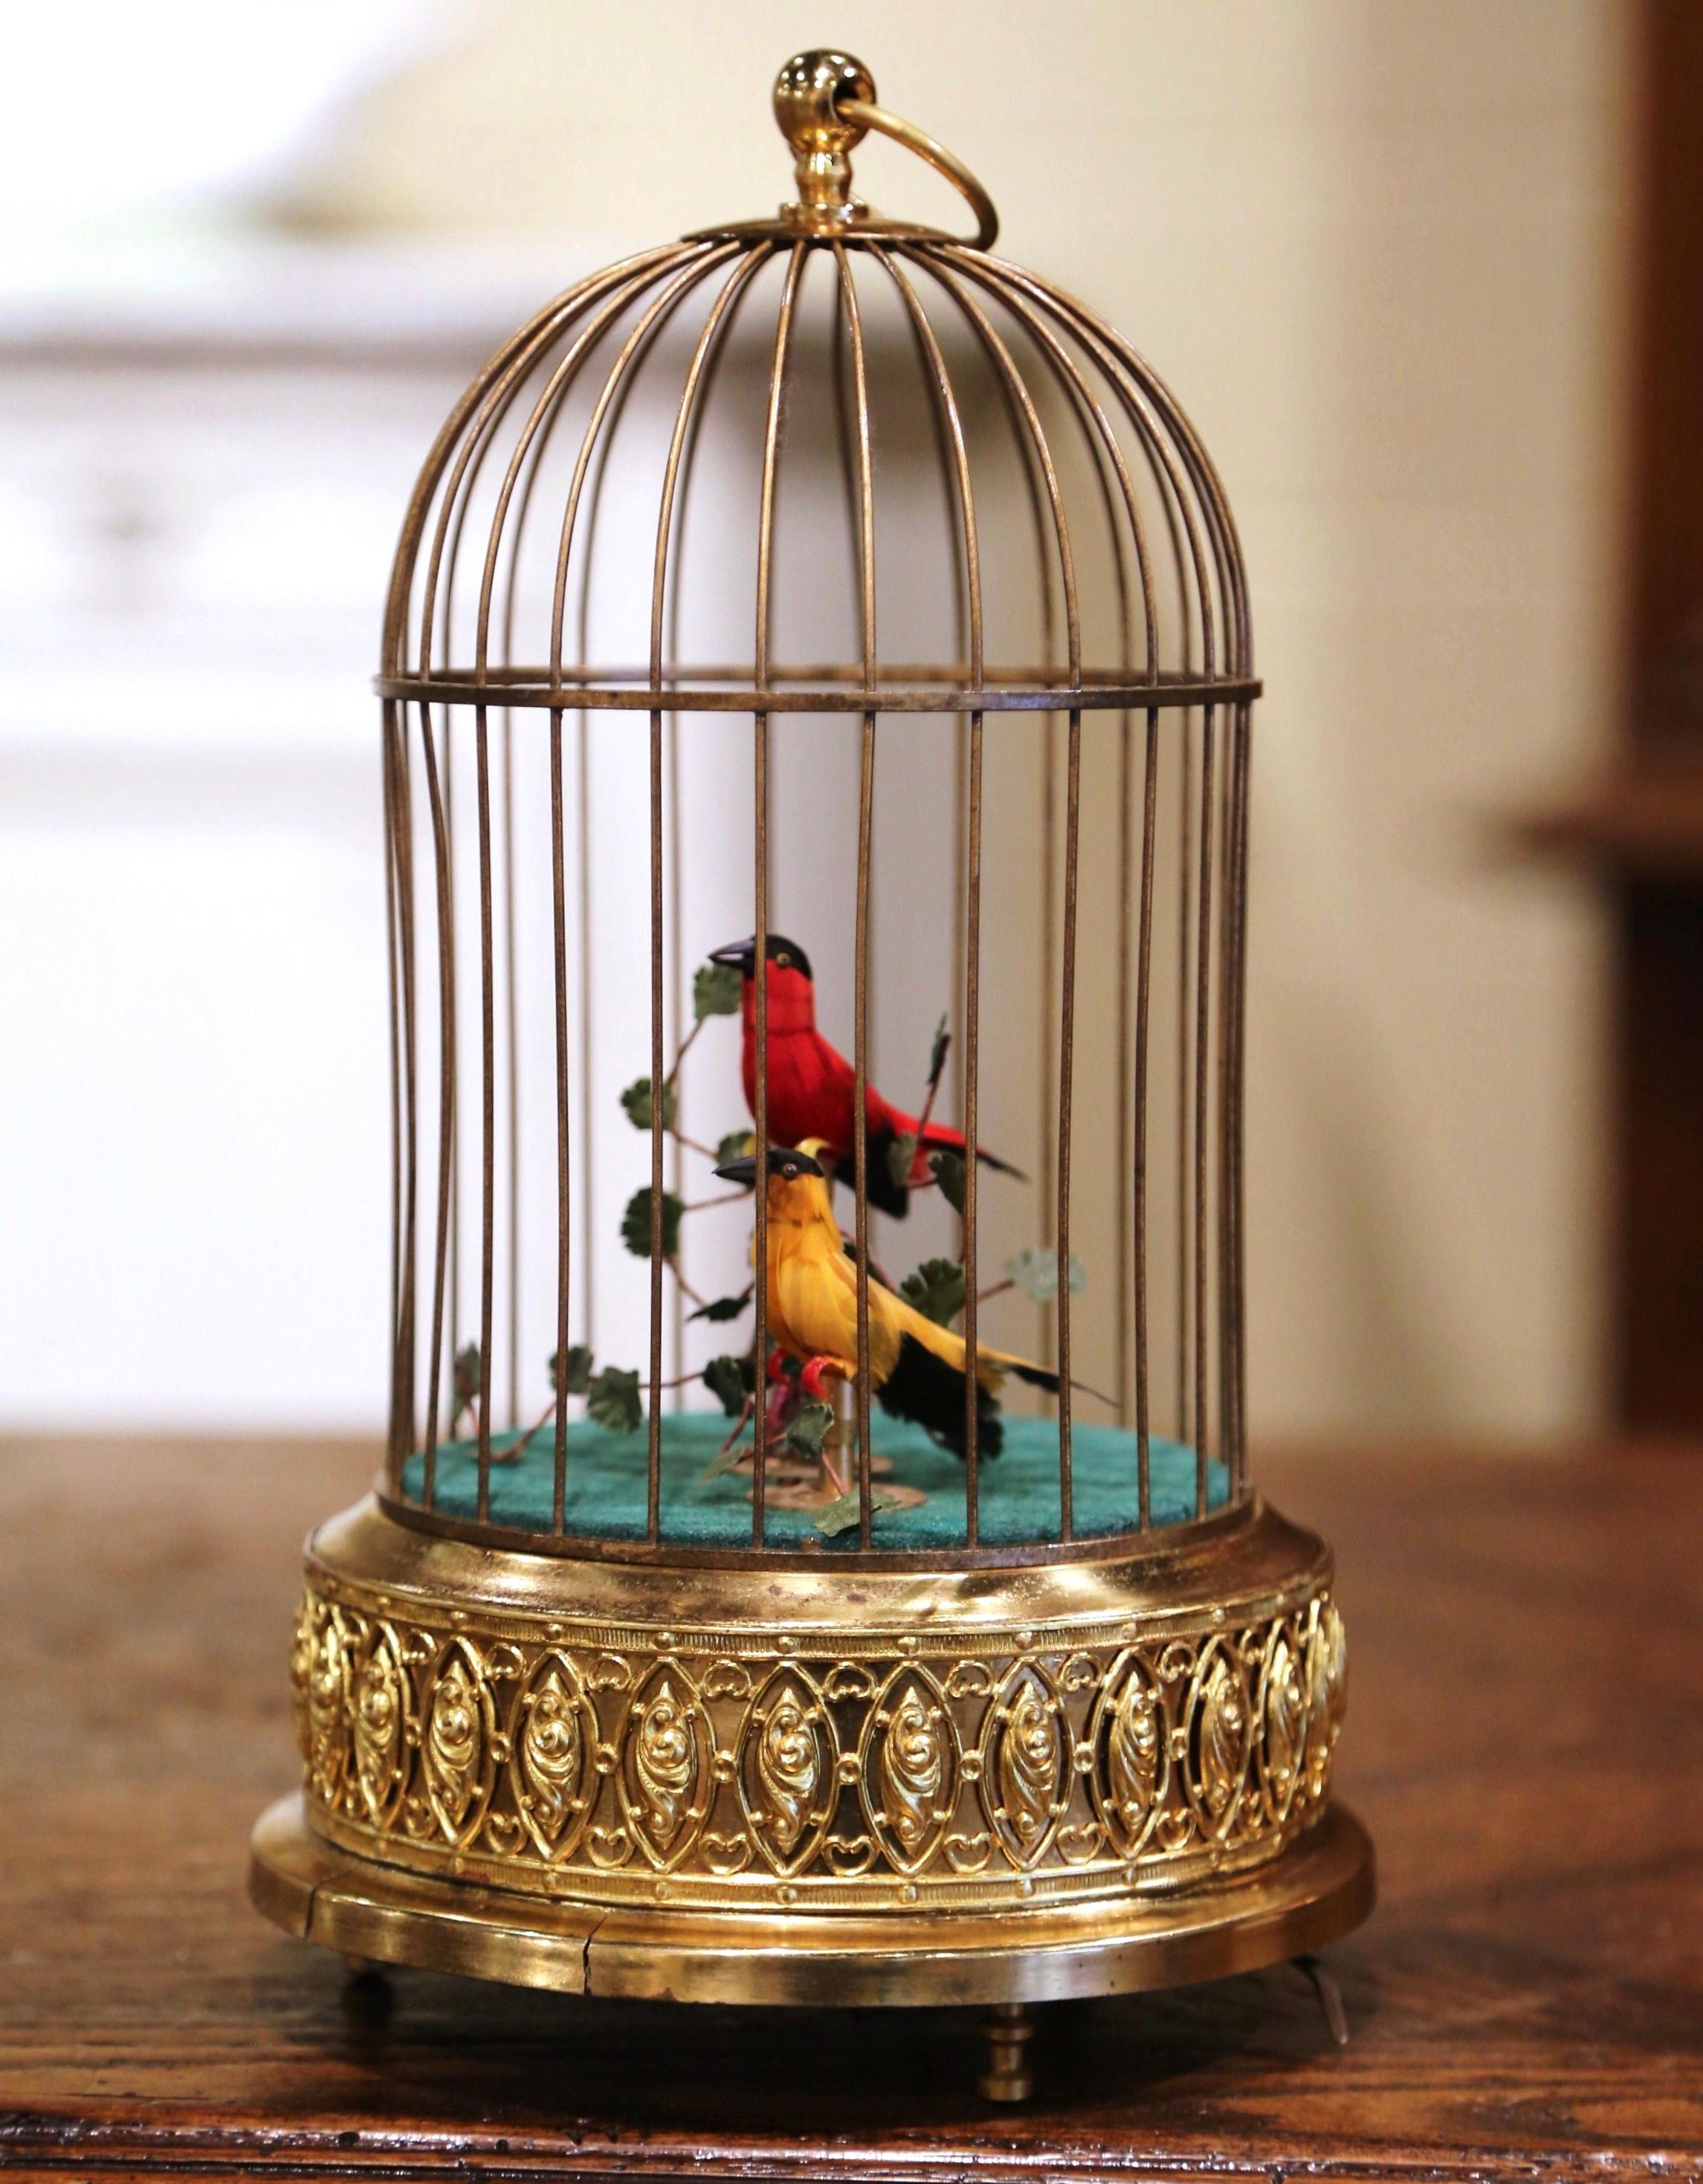 singing bird toy in cage